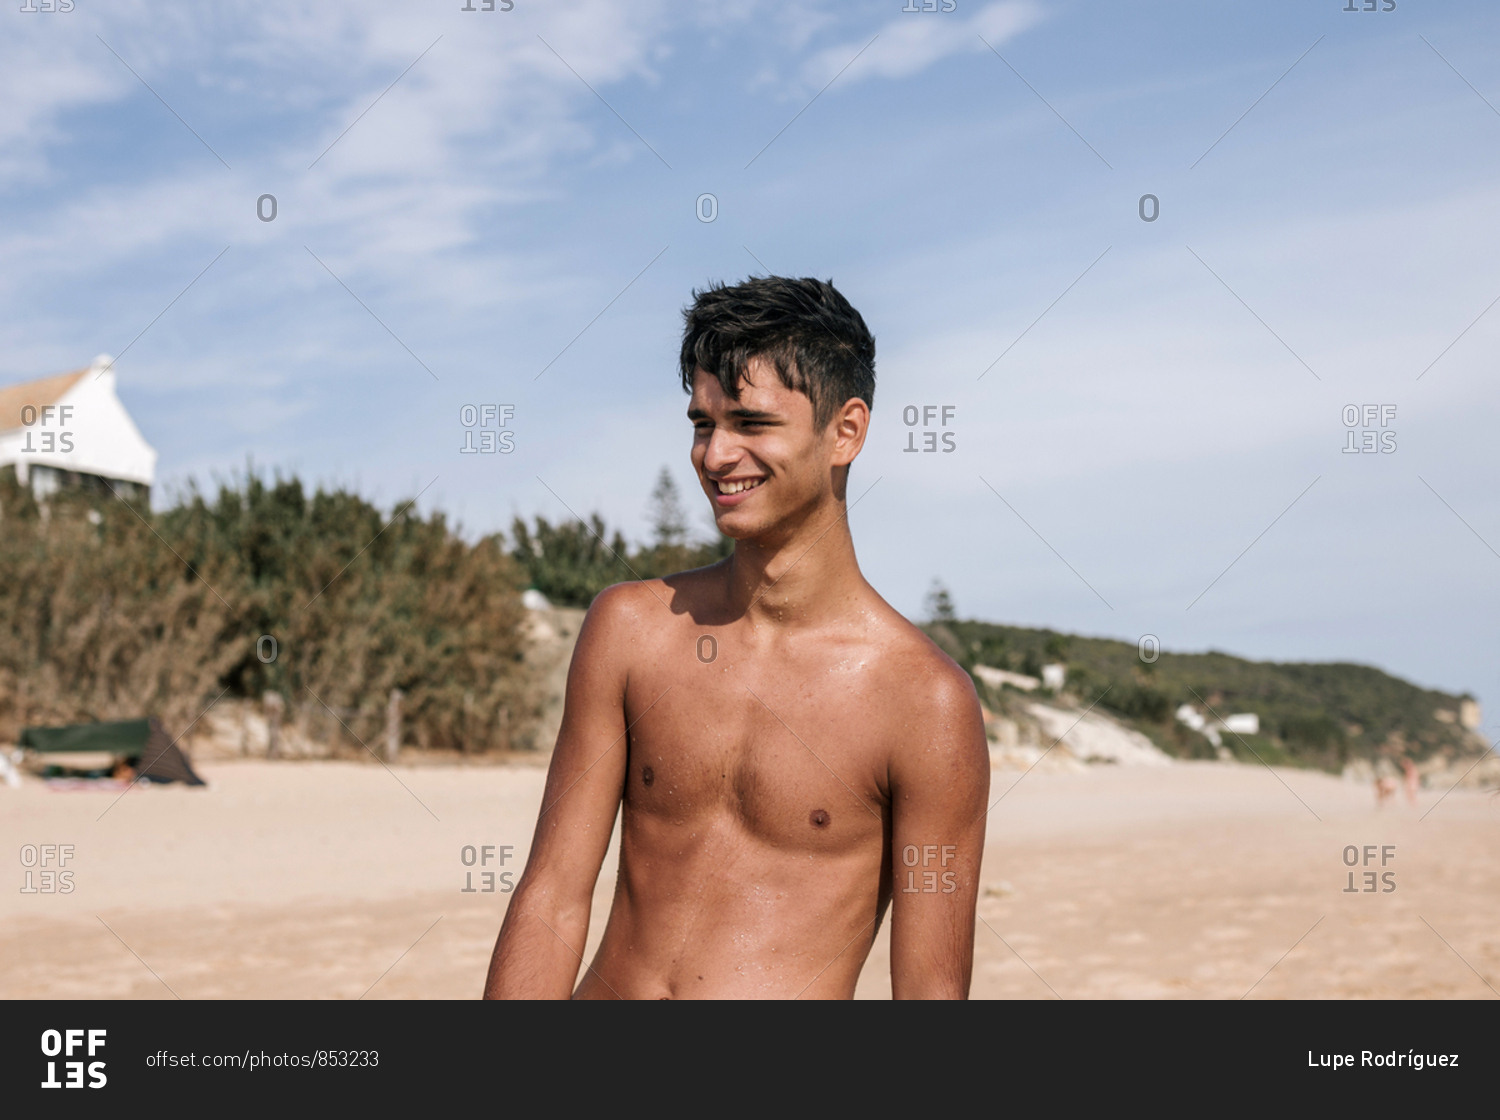 Naked Teens At The Beach